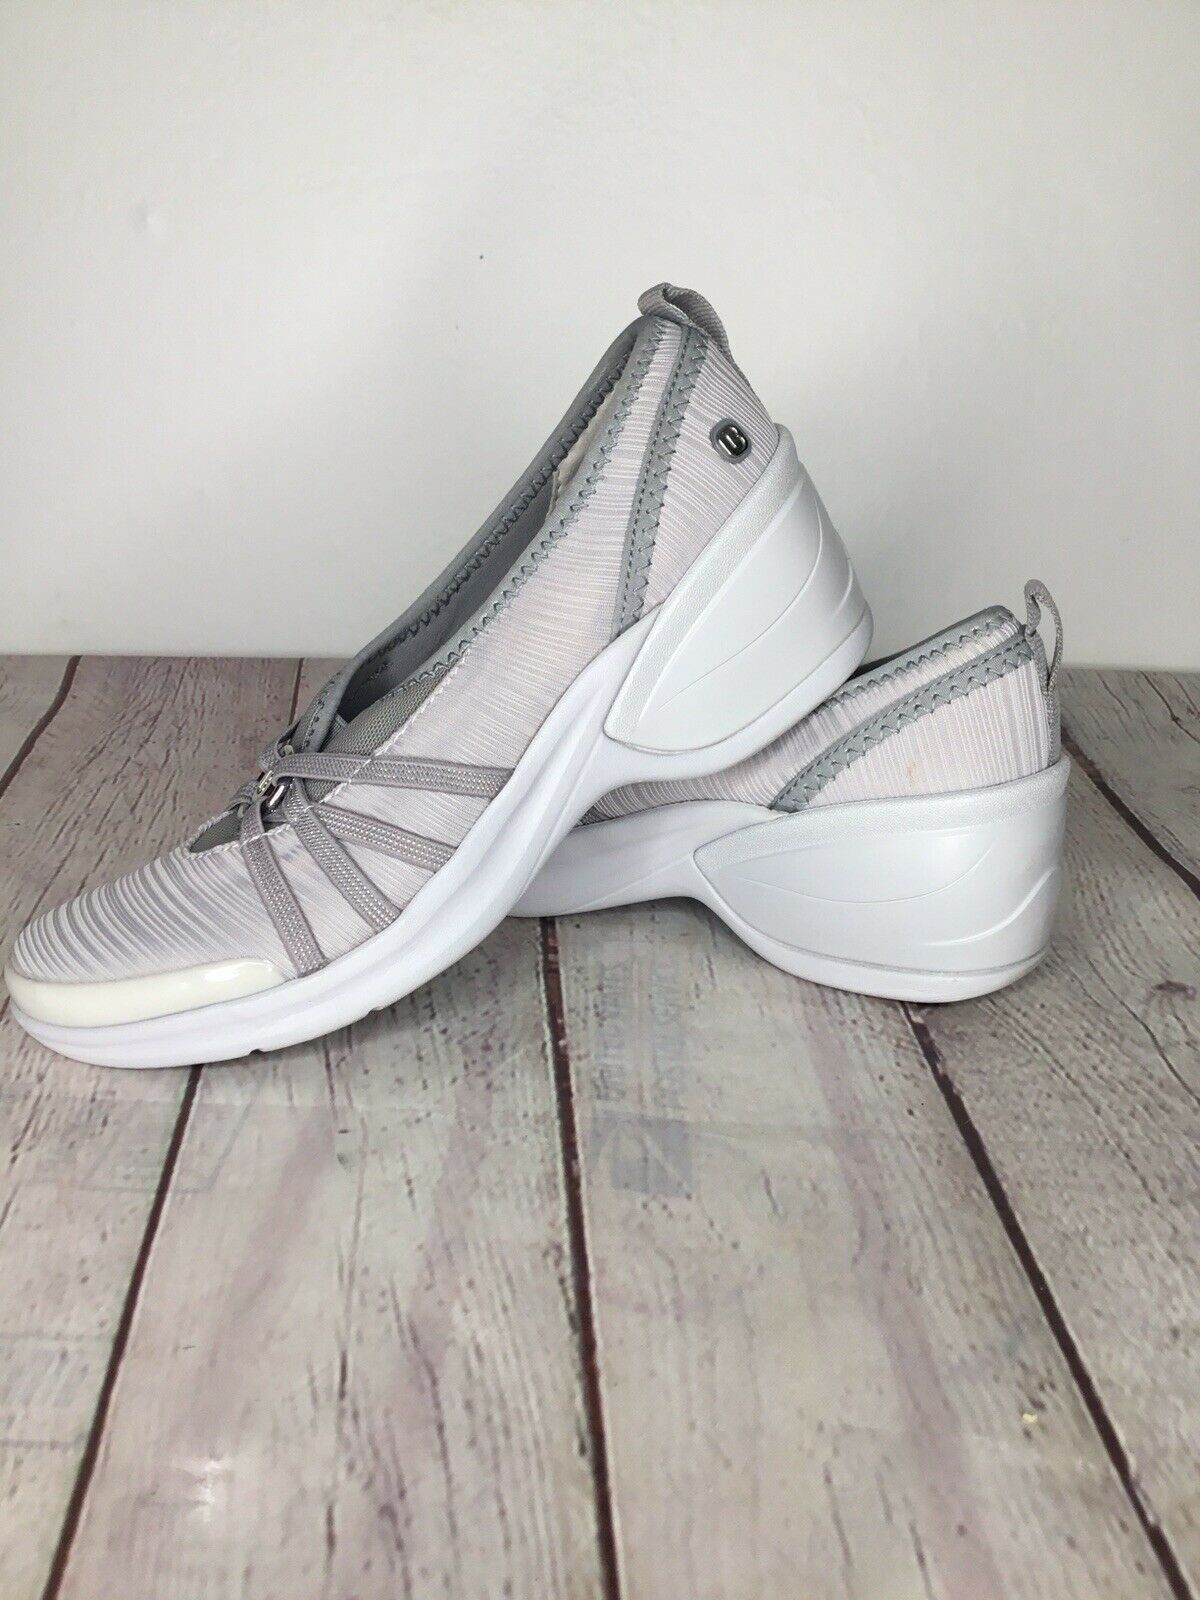 B Zees Womens Ballet Flats Slip On Shoes Gray Comfort Walk Shoes Size US 7